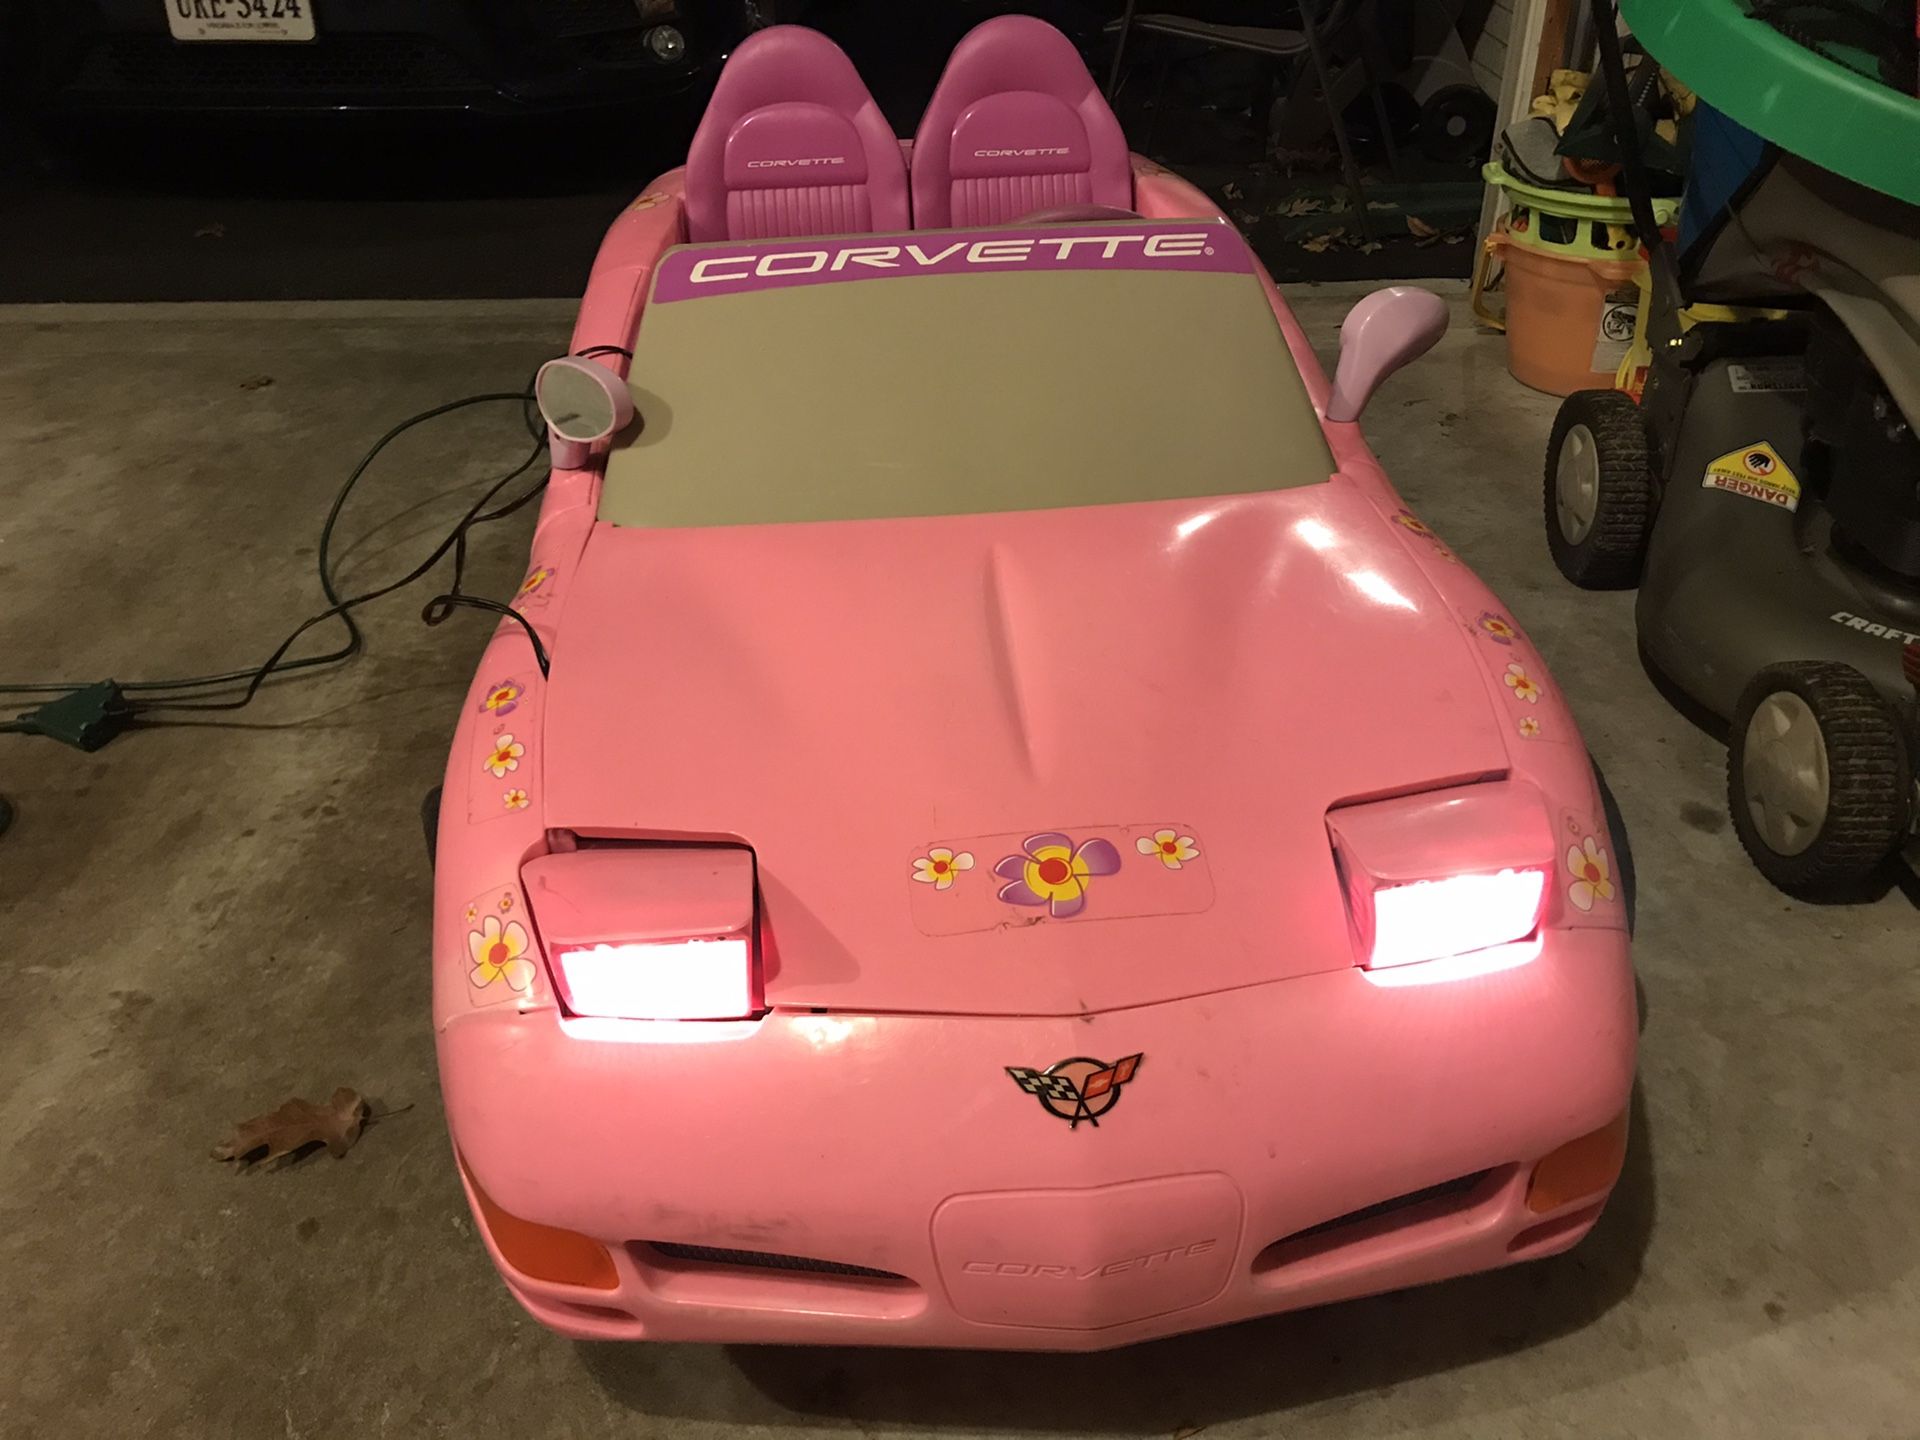 Power wheels girls pink corvette